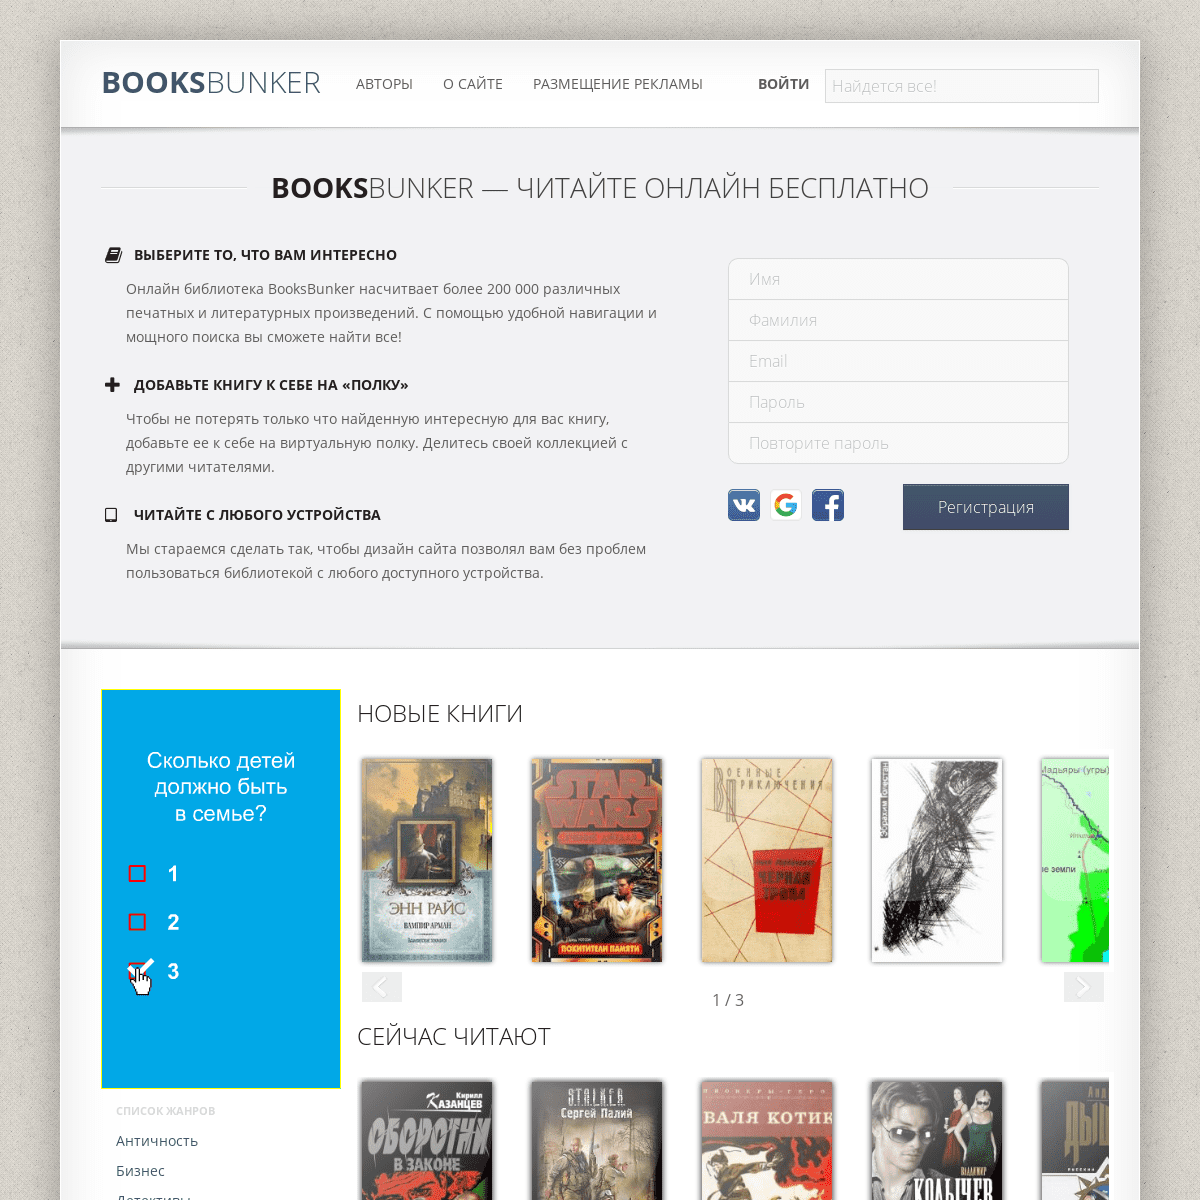 A complete backup of booksbunker.com